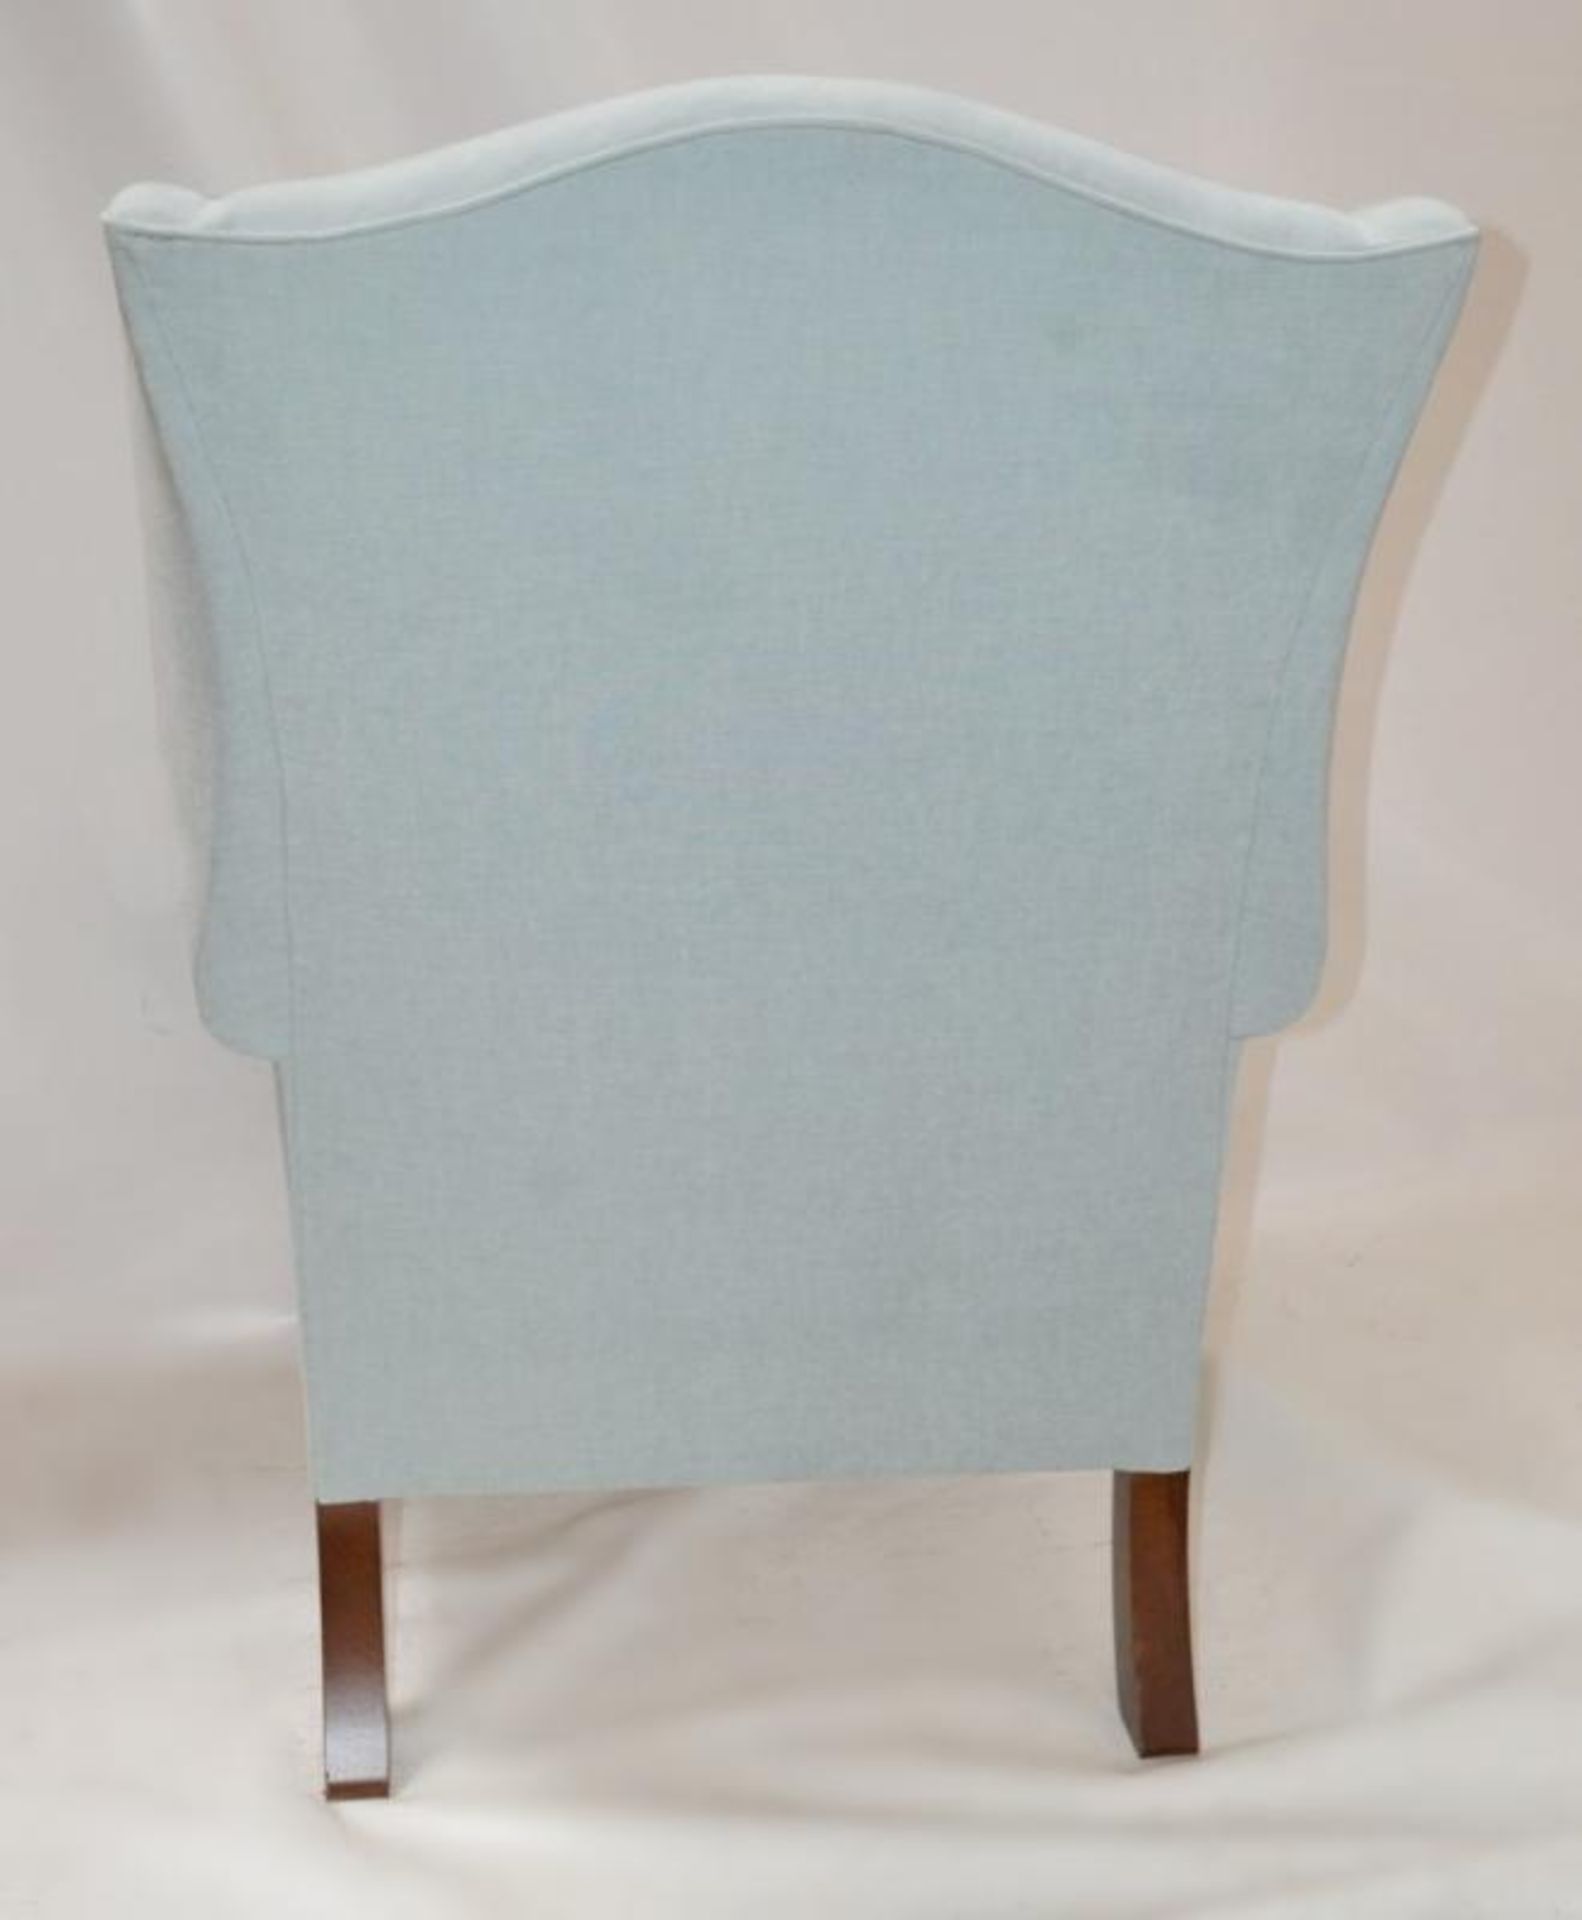 1 x Duresta "Somerset" Wing Chair Light Blue - Please Read Description - Dimensions: 113H x 91W x 92 - Image 4 of 11